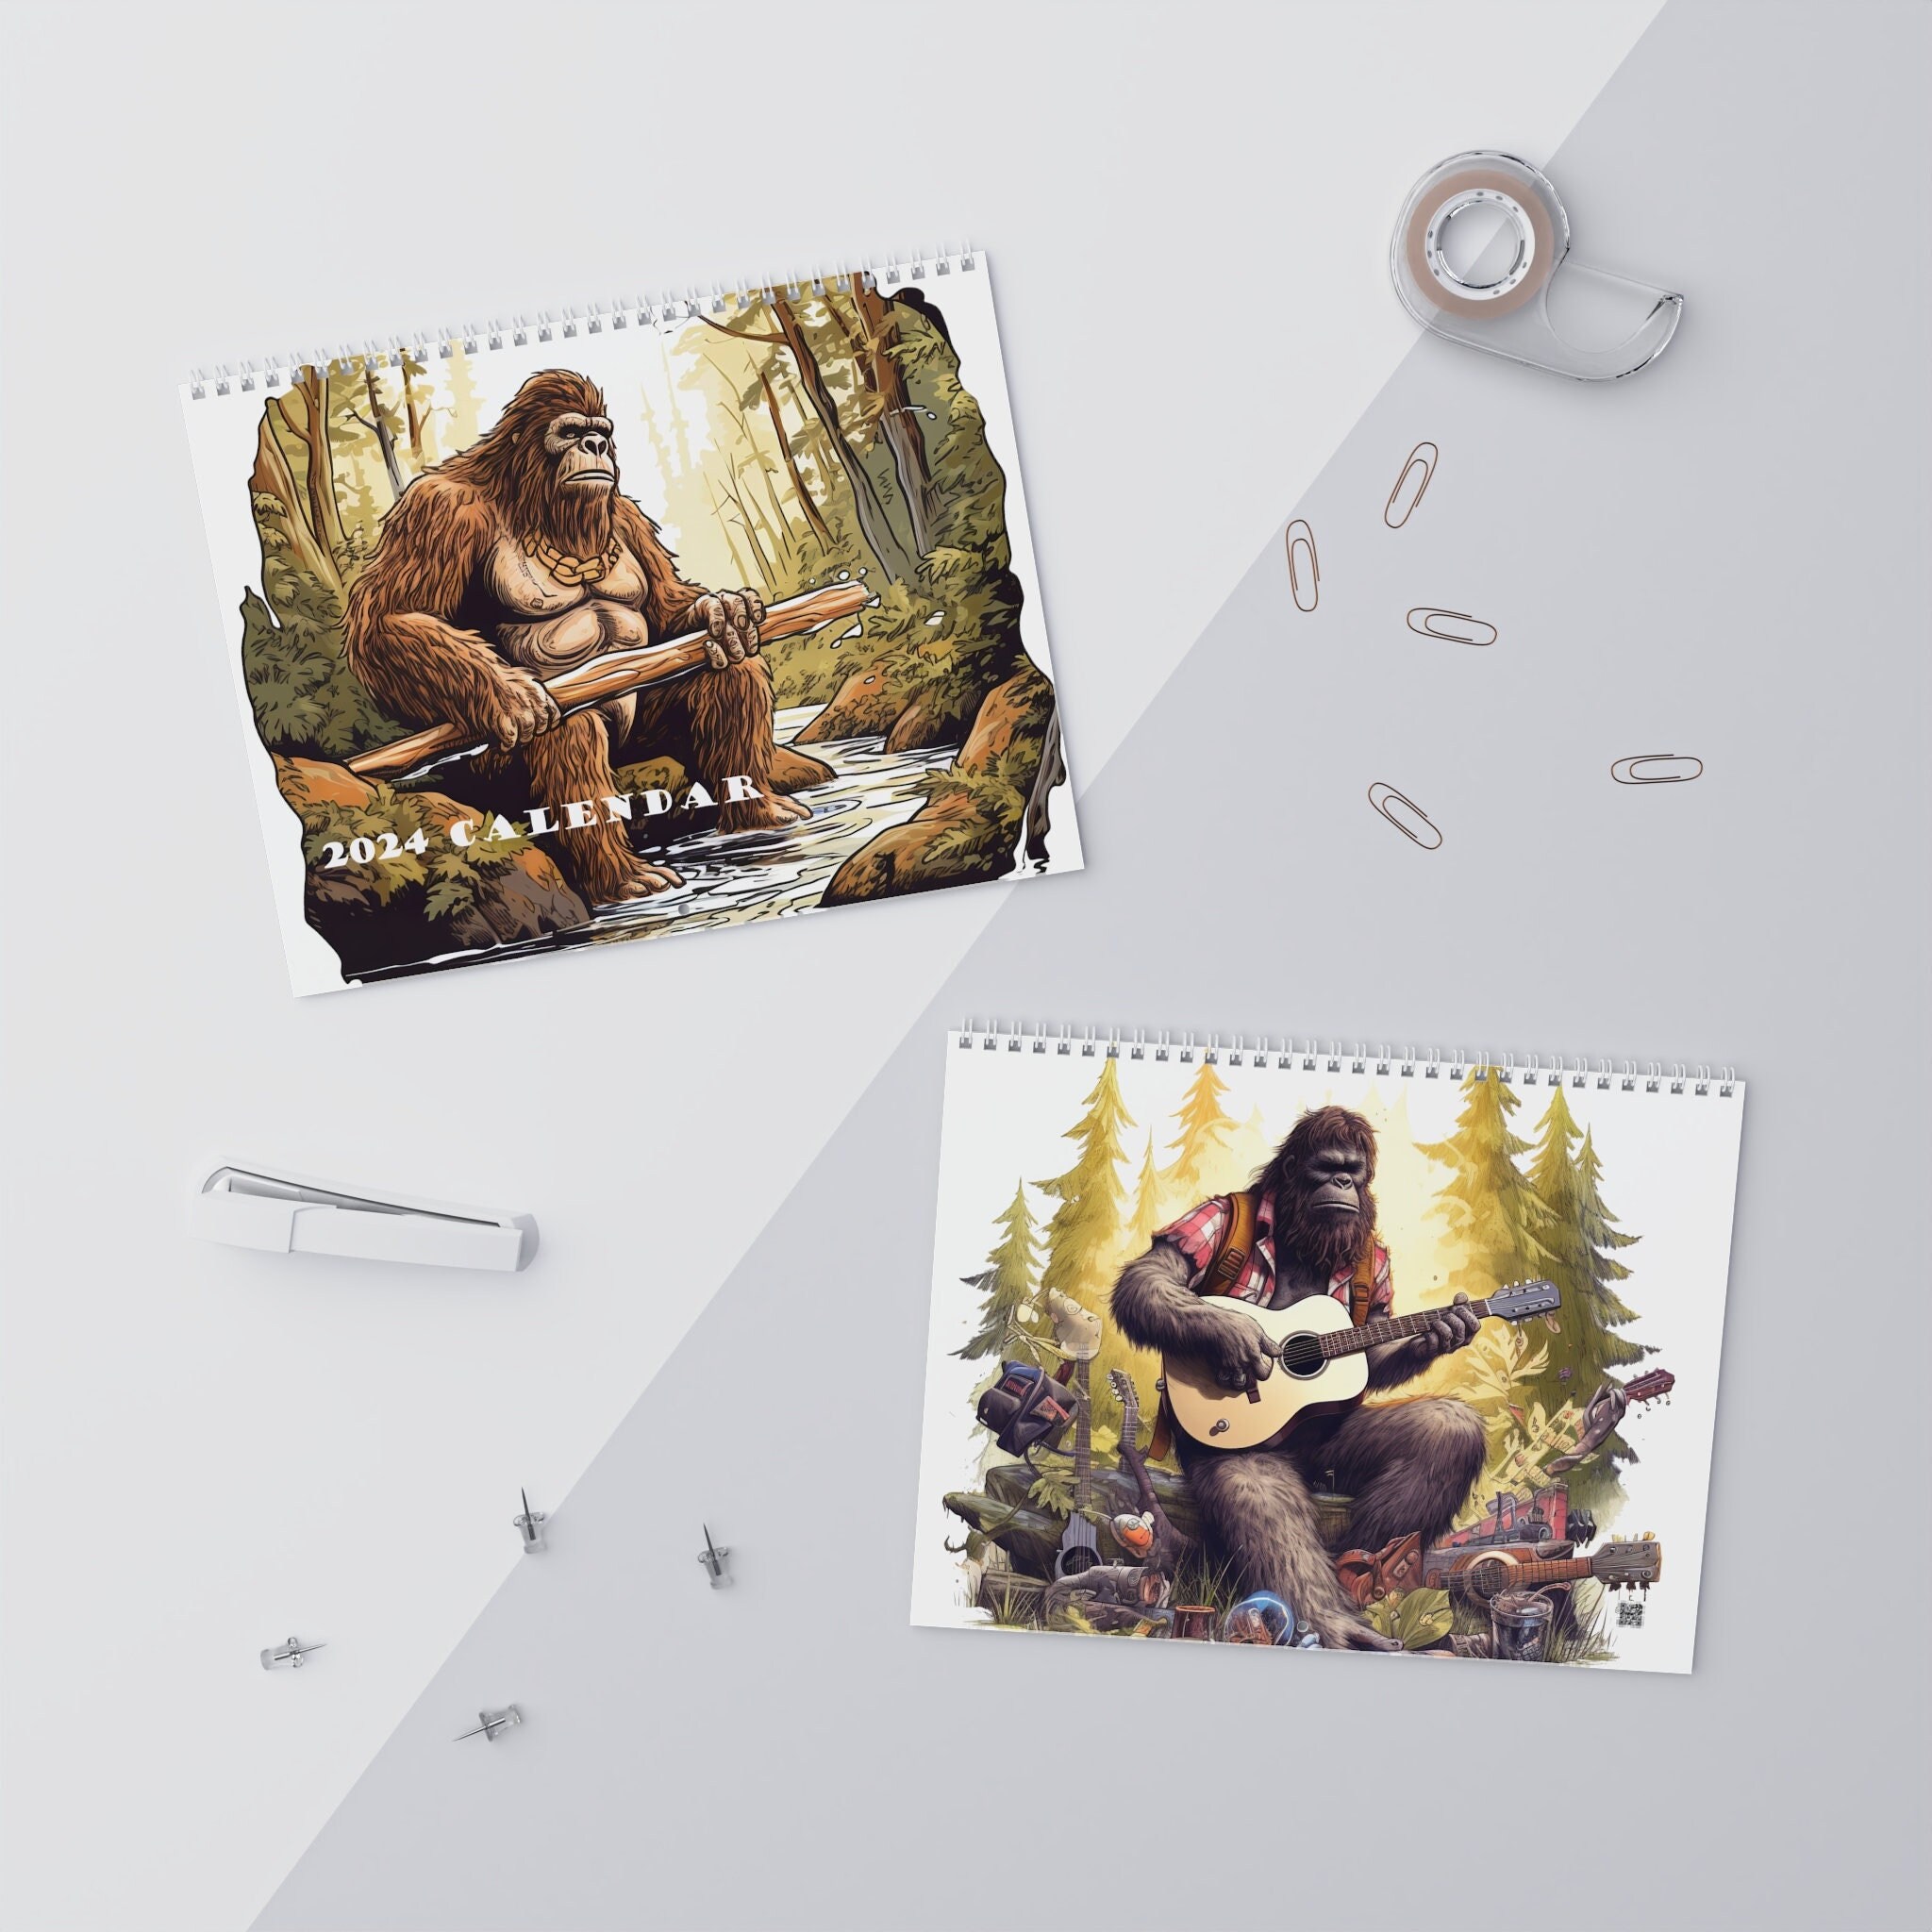 Bigfoot Sasquatch Rare Hair Sample LIMITED EDITION Tracker Tracking Hunter  Hunting Birthday Christmas Gift Present Stocking Stuffer 